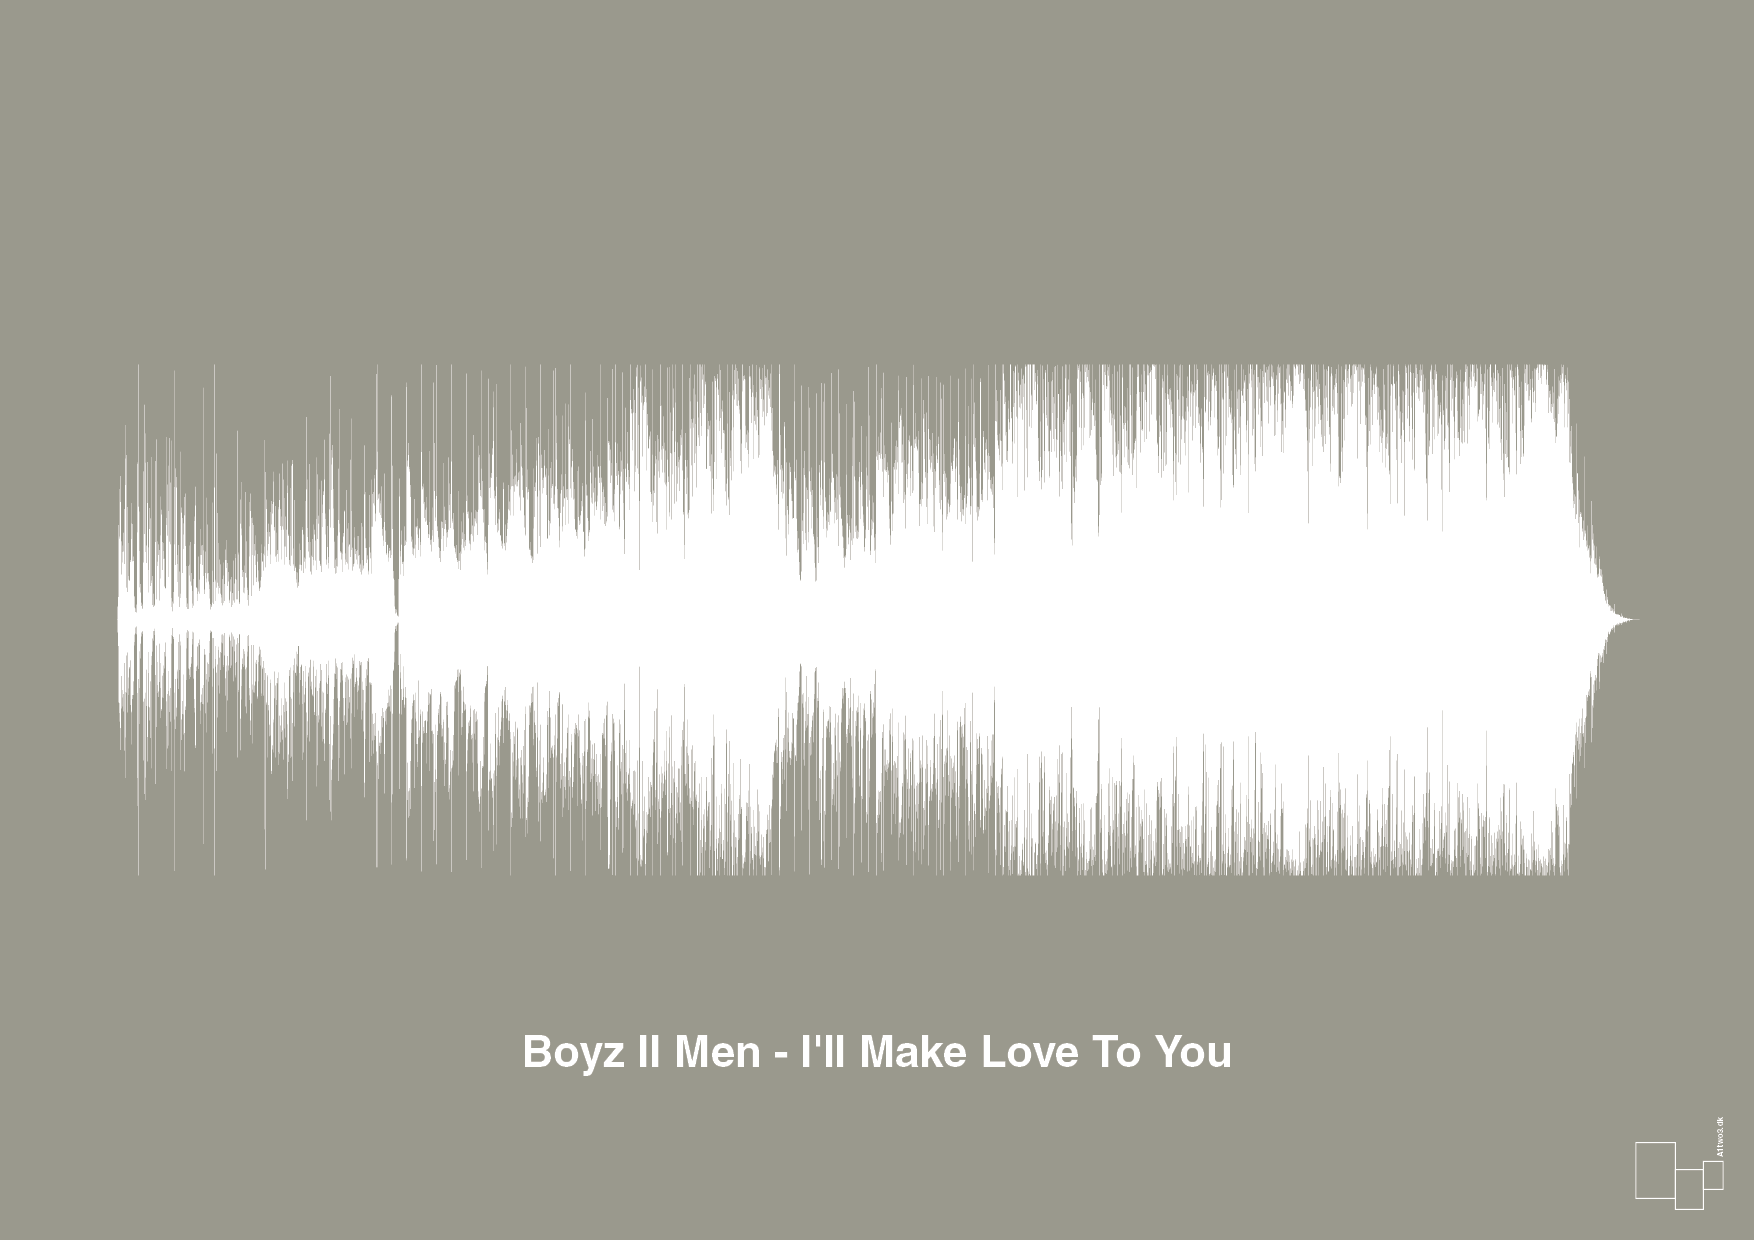 boyz II men - i'll make love to you - Plakat med Musik i Battleship Gray